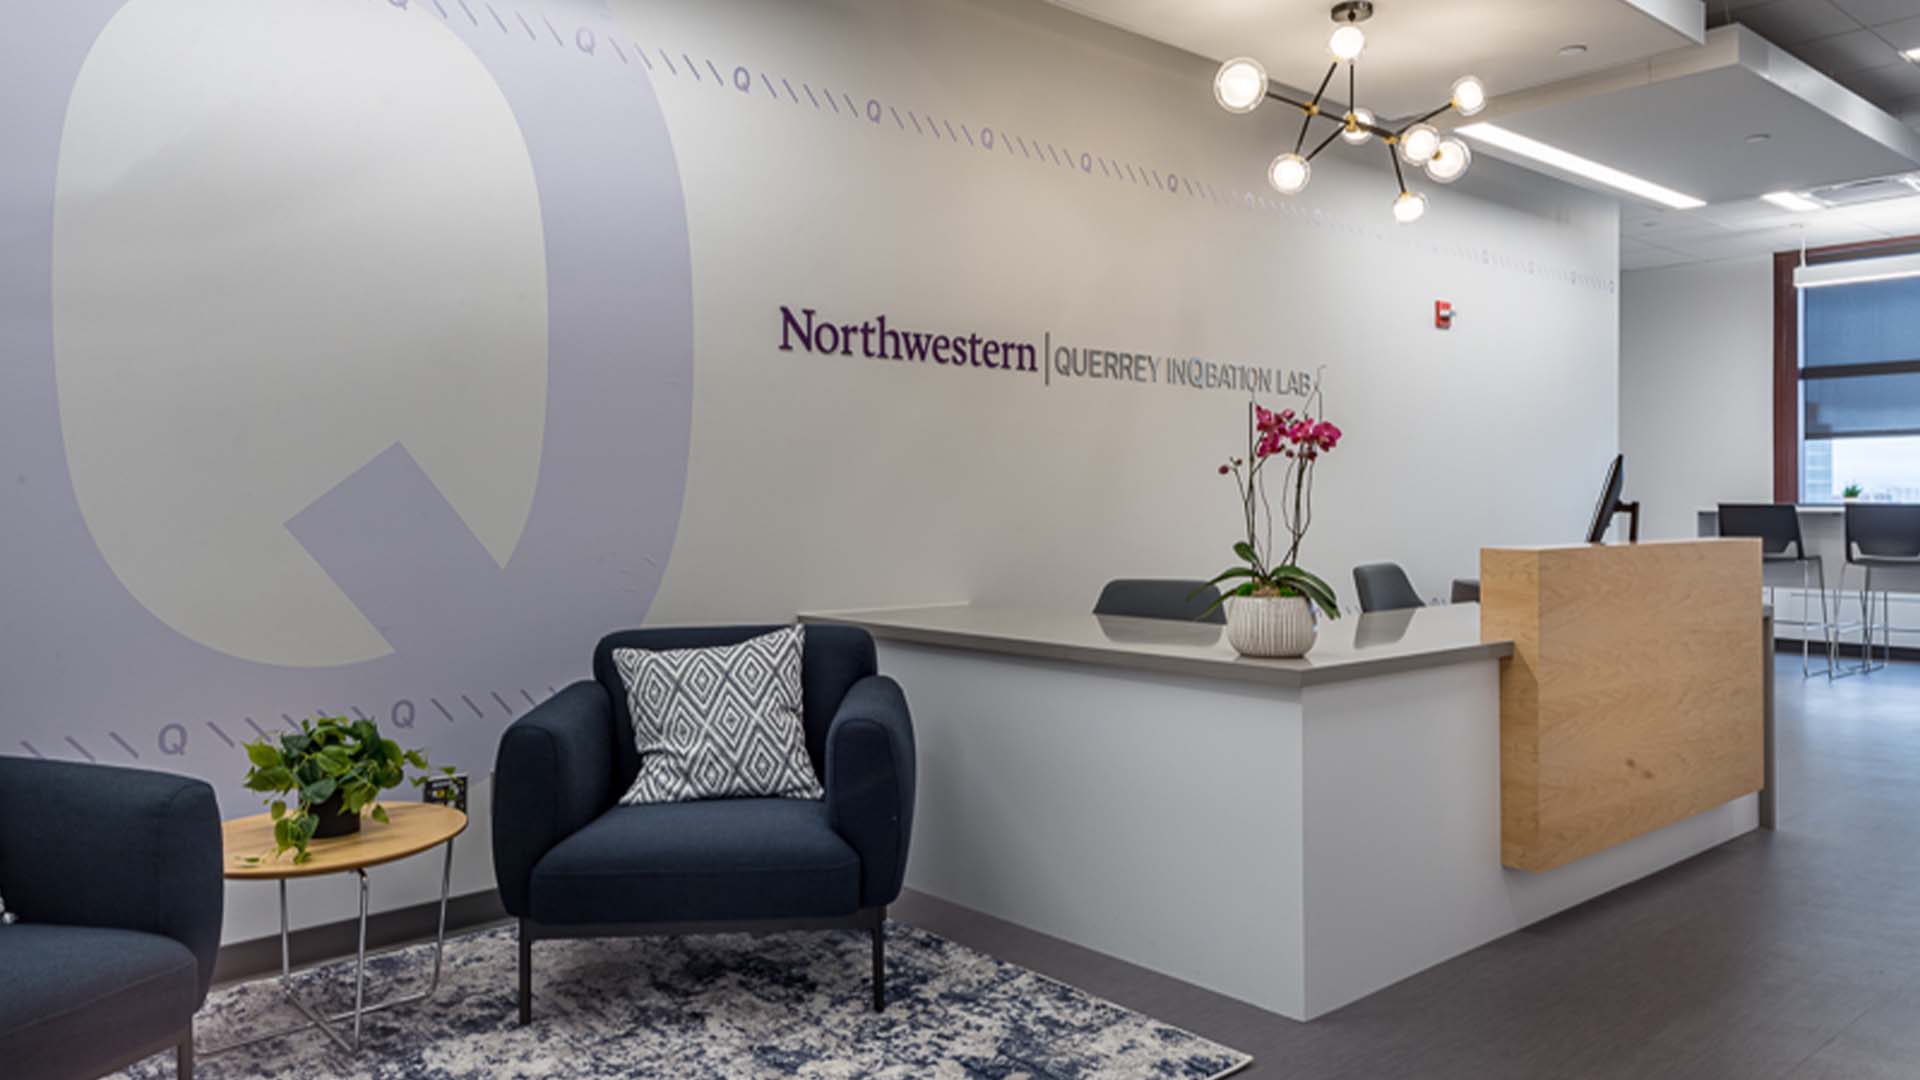 Northwestern University - Query Innovation Labs